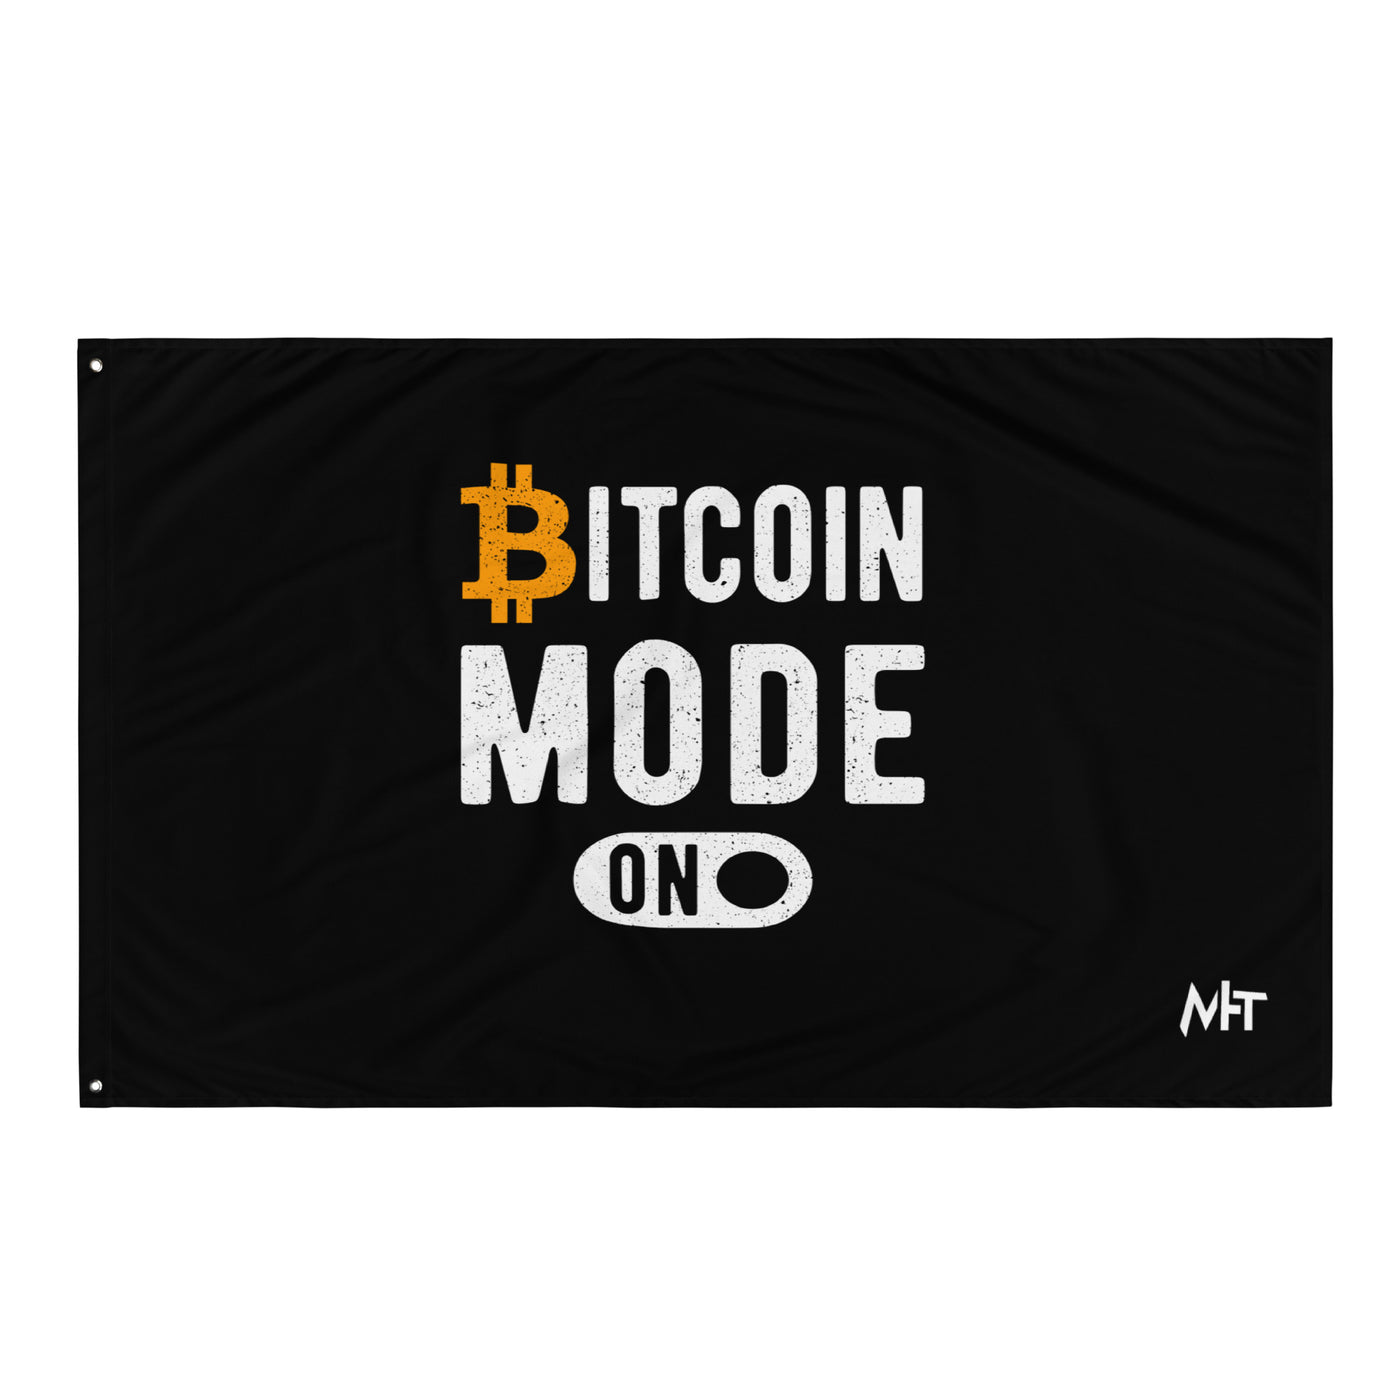 Bitcoin Mode is On Flag